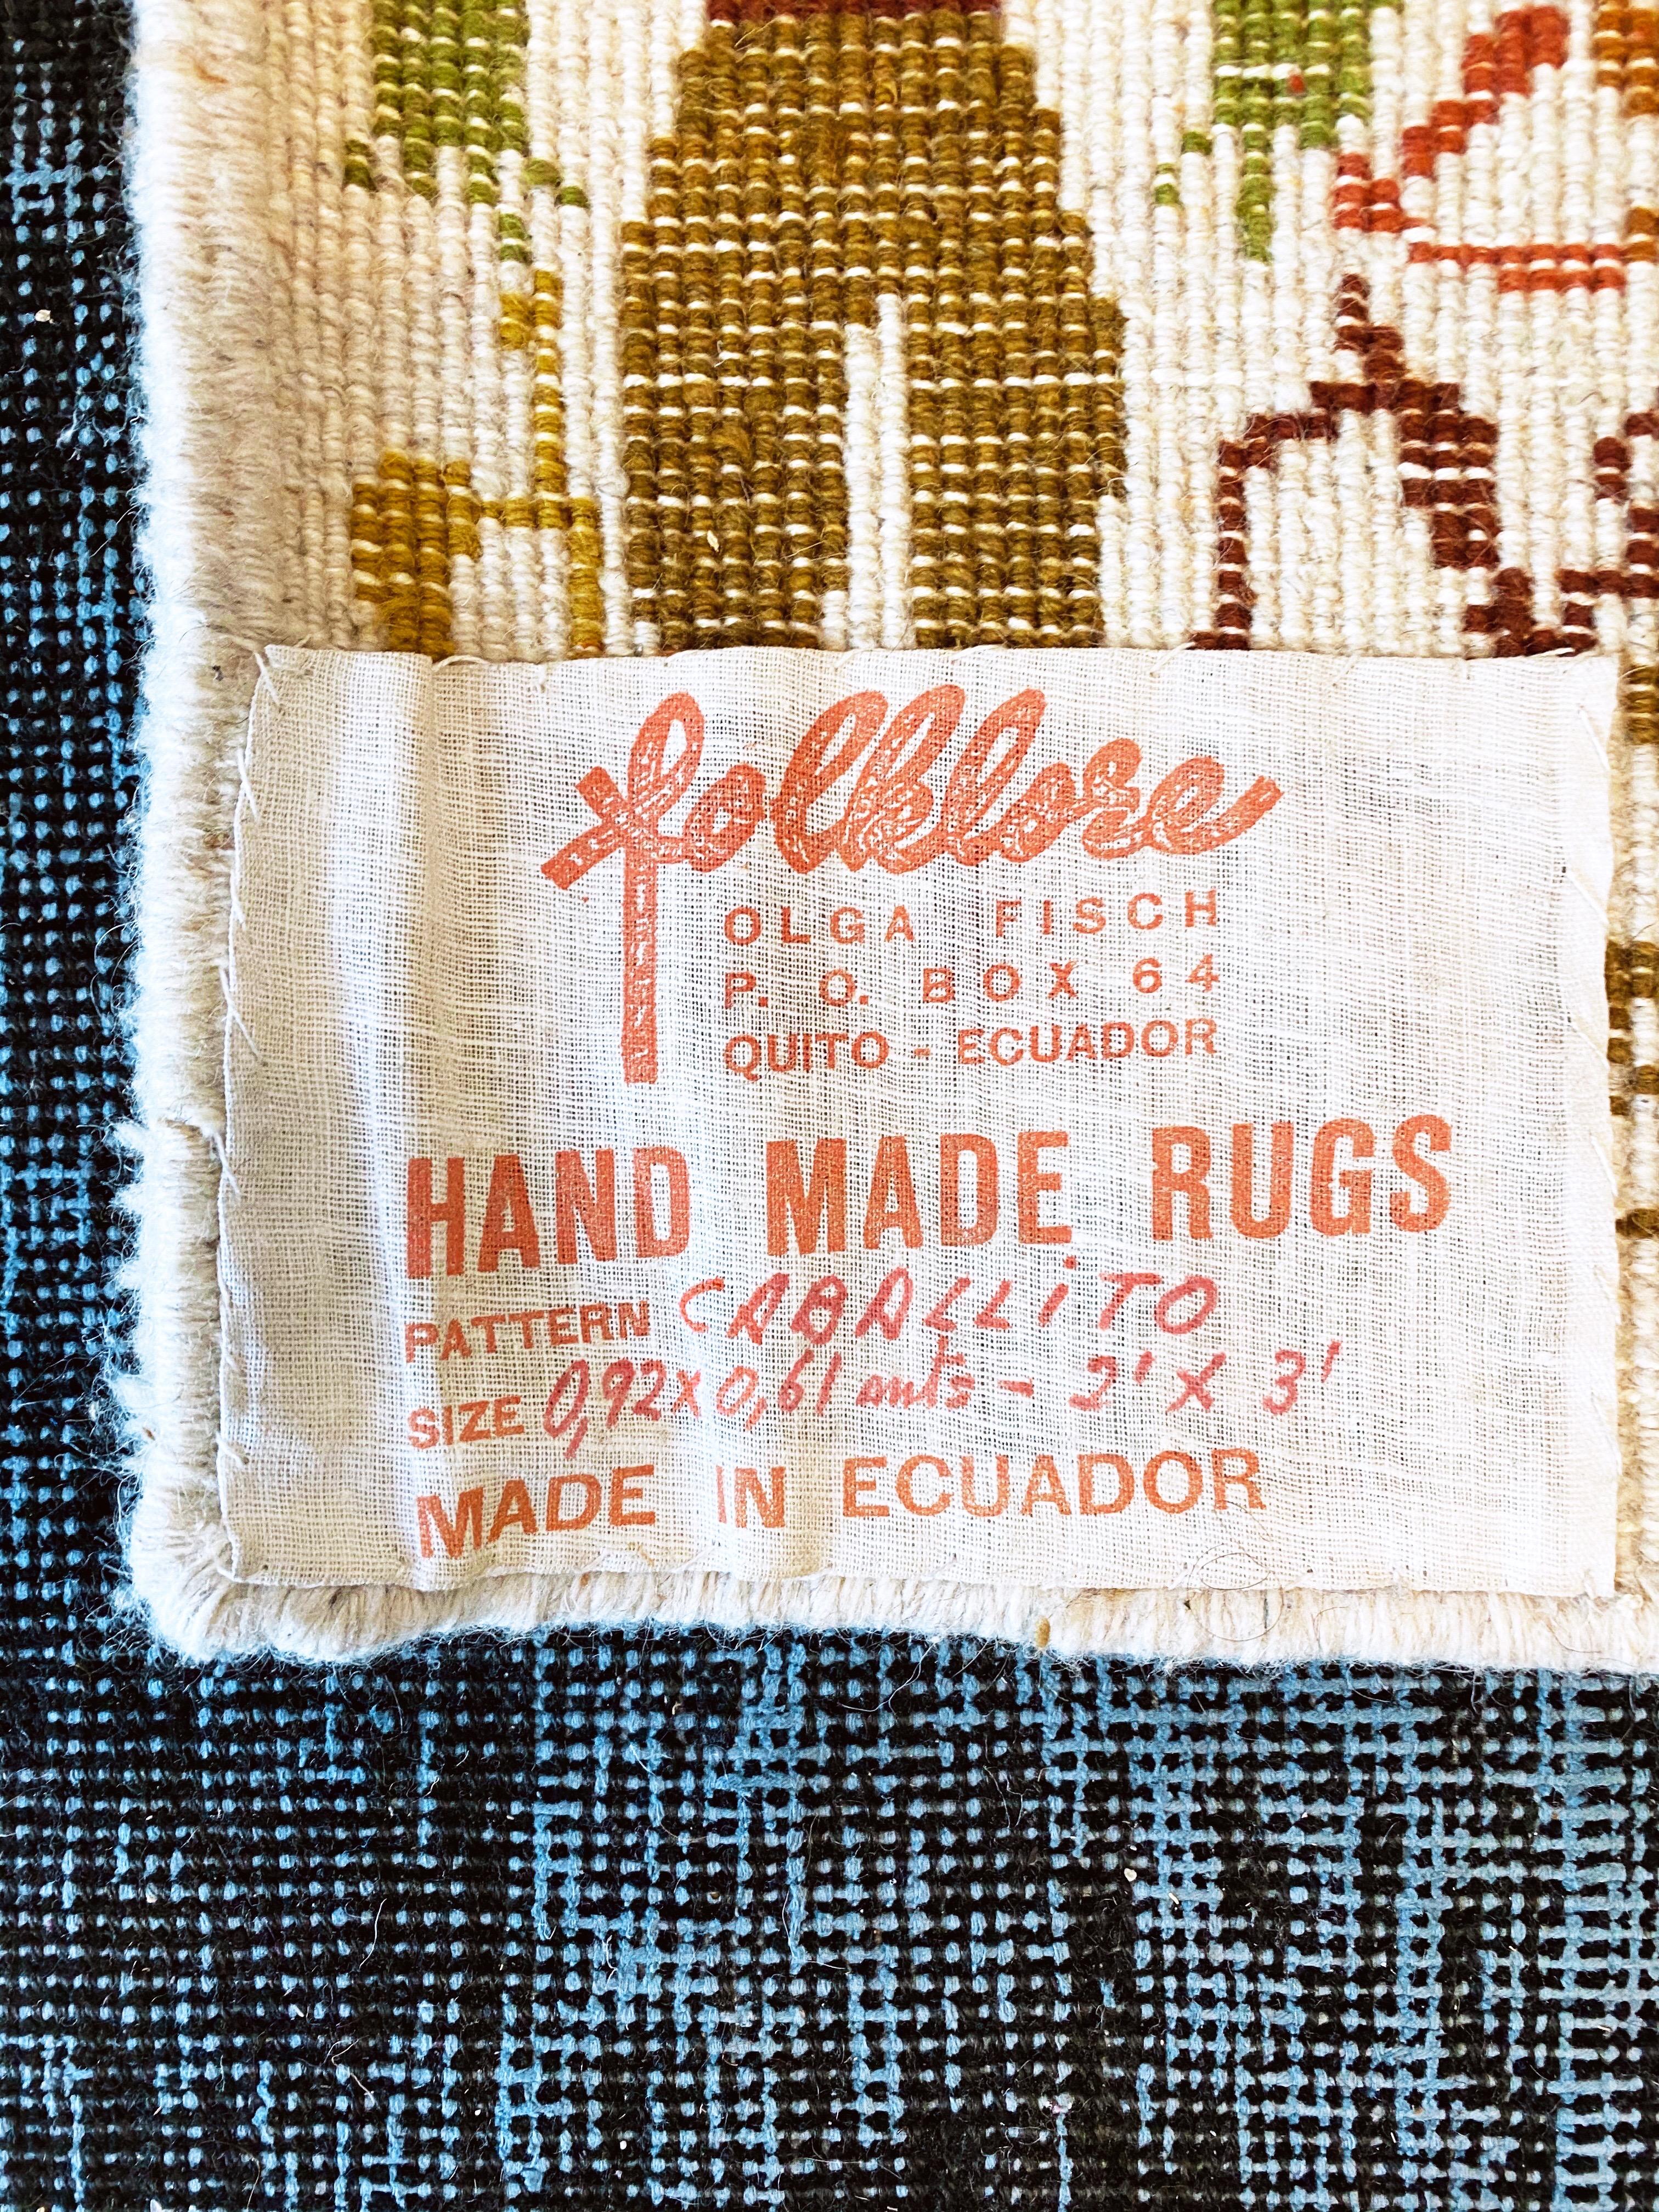 Wool Vintage Handmade 'Caballito' Folklore Rug by Olga Fisch, Ecuador, circa 1950s